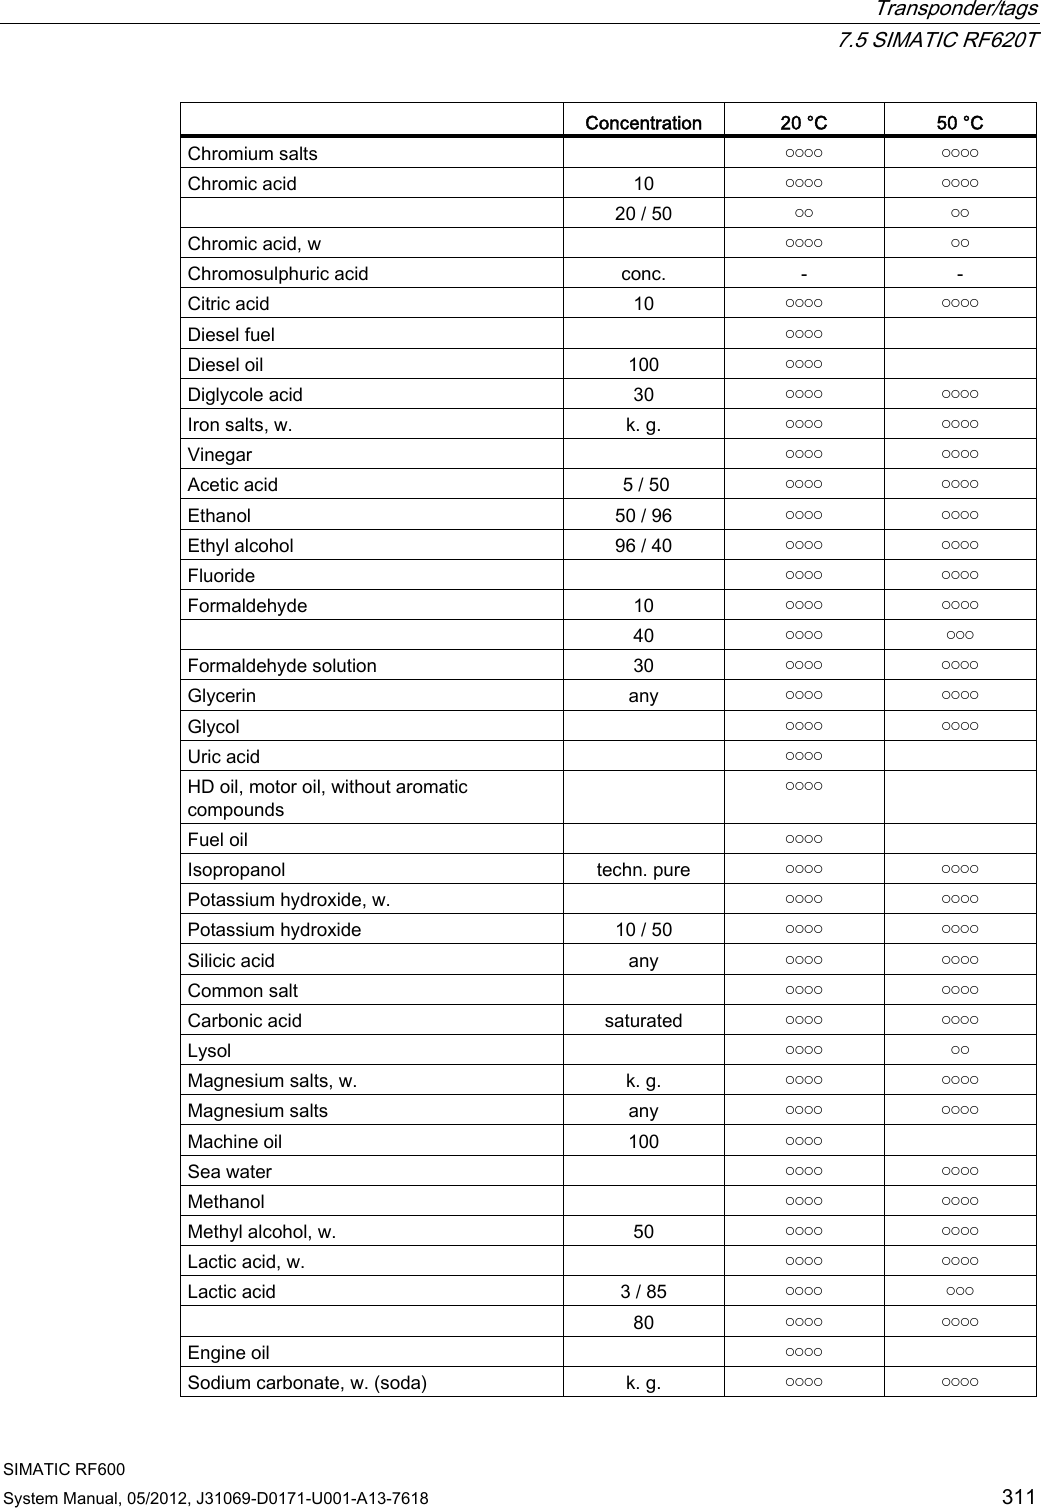  Transponder/tags  7.5 SIMATIC RF620T SIMATIC RF600 System Manual, 05/2012, J31069-D0171-U001-A13-7618  311   Concentration  20 °C  50 °C Chromium salts    ￮￮￮￮  ￮￮￮￮ Chromic acid  10  ￮￮￮￮  ￮￮￮￮   20 / 50  ￮￮  ￮￮ Chromic acid, w    ￮￮￮￮  ￮￮ Chromosulphuric acid  conc.  -  - Citric acid  10  ￮￮￮￮  ￮￮￮￮ Diesel fuel    ￮￮￮￮   Diesel oil  100  ￮￮￮￮   Diglycole acid  30  ￮￮￮￮  ￮￮￮￮ Iron salts, w.  k. g.  ￮￮￮￮  ￮￮￮￮ Vinegar    ￮￮￮￮  ￮￮￮￮ Acetic acid   5 / 50  ￮￮￮￮  ￮￮￮￮ Ethanol  50 / 96  ￮￮￮￮  ￮￮￮￮ Ethyl alcohol  96 / 40  ￮￮￮￮  ￮￮￮￮ Fluoride    ￮￮￮￮  ￮￮￮￮ Formaldehyde  10  ￮￮￮￮  ￮￮￮￮   40  ￮￮￮￮  ￮￮￮ Formaldehyde solution  30  ￮￮￮￮  ￮￮￮￮ Glycerin  any  ￮￮￮￮  ￮￮￮￮ Glycol    ￮￮￮￮  ￮￮￮￮ Uric acid    ￮￮￮￮   HD oil, motor oil, without aromatic compounds   ￮￮￮￮   Fuel oil    ￮￮￮￮   Isopropanol  techn. pure  ￮￮￮￮  ￮￮￮￮ Potassium hydroxide, w.    ￮￮￮￮  ￮￮￮￮ Potassium hydroxide  10 / 50  ￮￮￮￮  ￮￮￮￮ Silicic acid  any  ￮￮￮￮  ￮￮￮￮ Common salt    ￮￮￮￮  ￮￮￮￮ Carbonic acid  saturated  ￮￮￮￮  ￮￮￮￮ Lysol    ￮￮￮￮  ￮￮ Magnesium salts, w.  k. g.  ￮￮￮￮  ￮￮￮￮ Magnesium salts  any  ￮￮￮￮  ￮￮￮￮ Machine oil  100  ￮￮￮￮   Sea water    ￮￮￮￮  ￮￮￮￮ Methanol    ￮￮￮￮  ￮￮￮￮ Methyl alcohol, w.  50  ￮￮￮￮  ￮￮￮￮ Lactic acid, w.    ￮￮￮￮  ￮￮￮￮ Lactic acid  3 / 85  ￮￮￮￮  ￮￮￮   80  ￮￮￮￮  ￮￮￮￮ Engine oil    ￮￮￮￮   Sodium carbonate, w. (soda)  k. g.  ￮￮￮￮  ￮￮￮￮ 